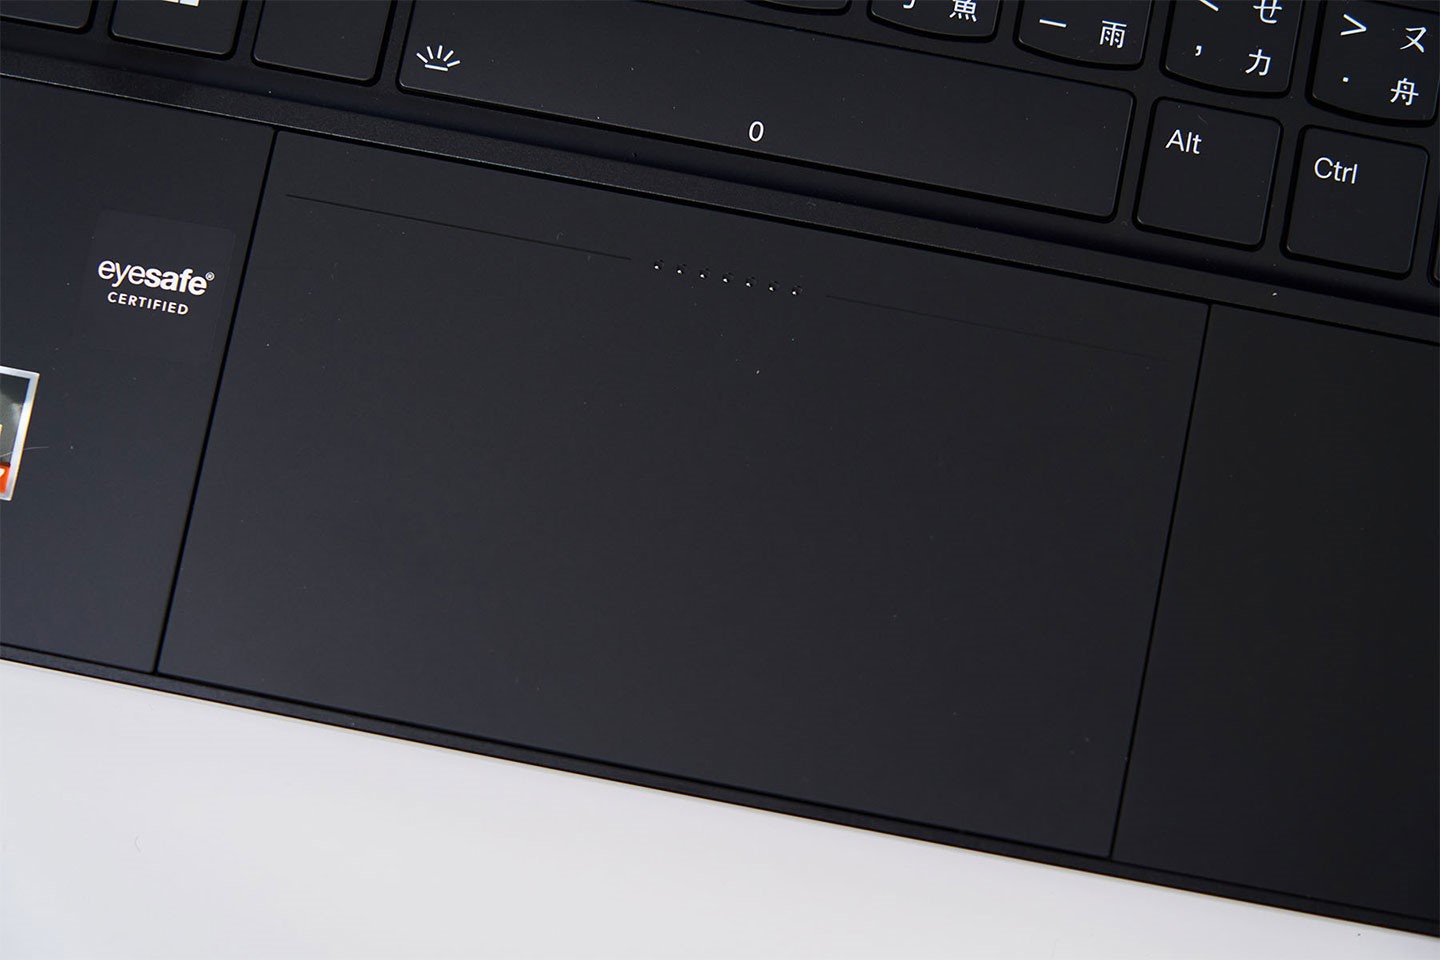 ThinkPad Z13 另一個特色是配備了大尺寸的無鍵式玻璃觸控板，並整合敲擊與壓力感應功能，可直接透過雙擊啟動快速功能表來完成更多功能的切換，但操作前會需要花一點時間適應。